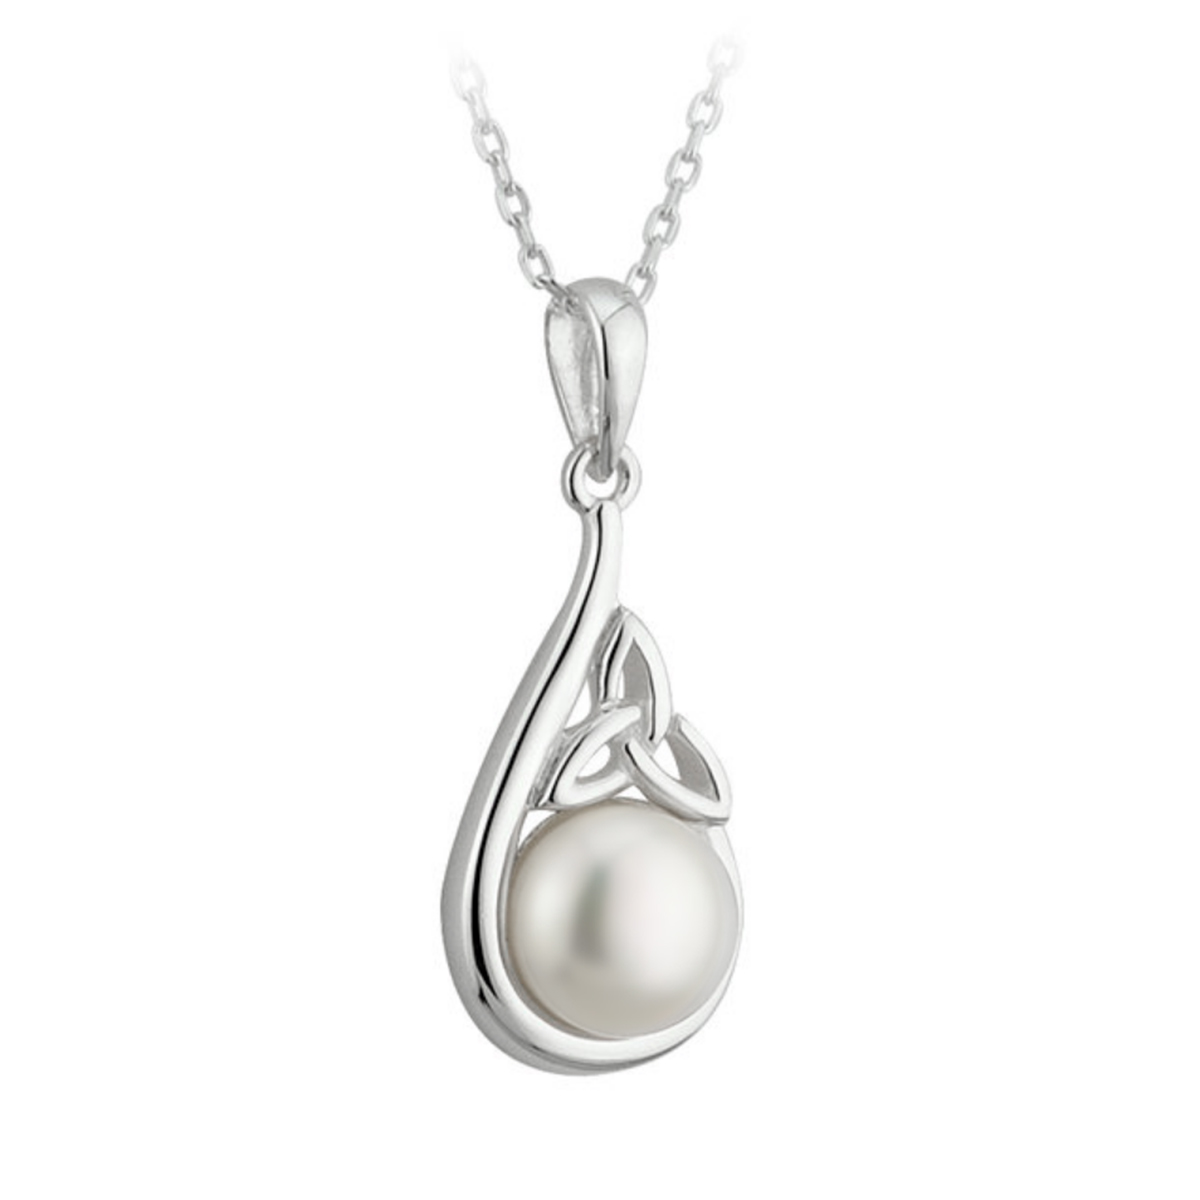 Trinity Pearl Kette - Sterling Silber mit Perle - handgefertigt in Irland